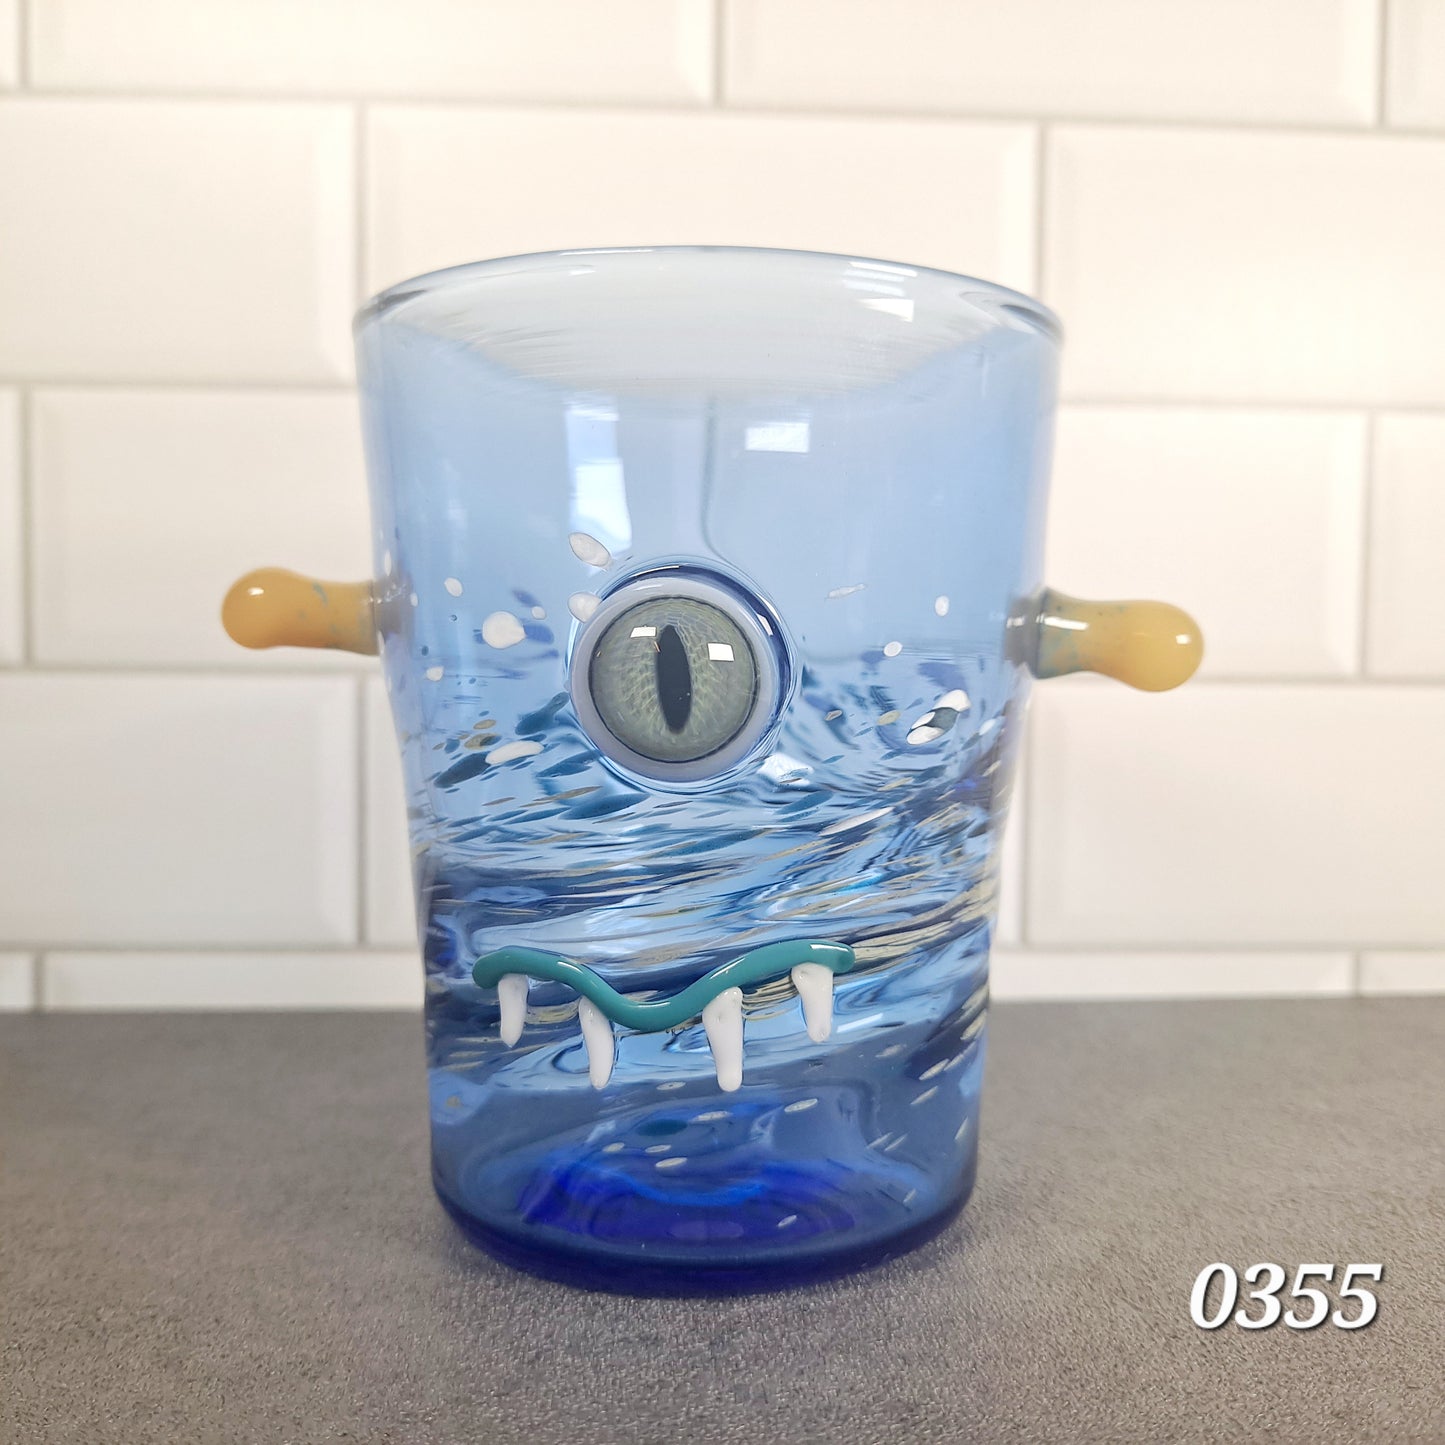 Eyeball Monster Drinkware, Cups, Wine glasses, and Mugs